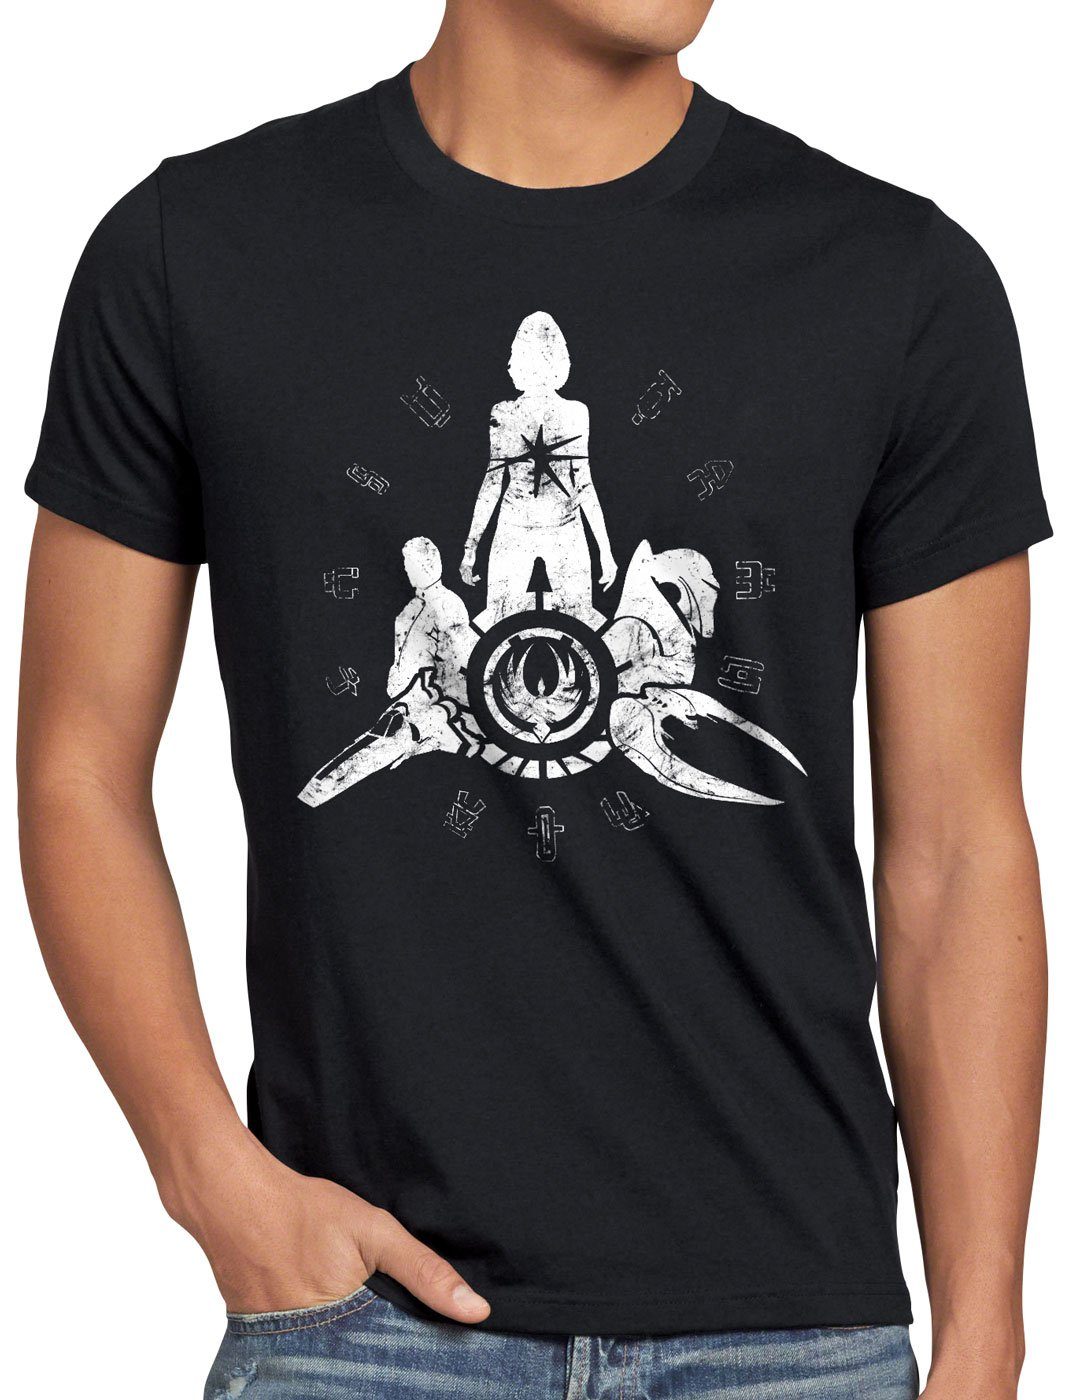 style3 Print-Shirt Herren T-Shirt Battle Stars galactica space schwarz